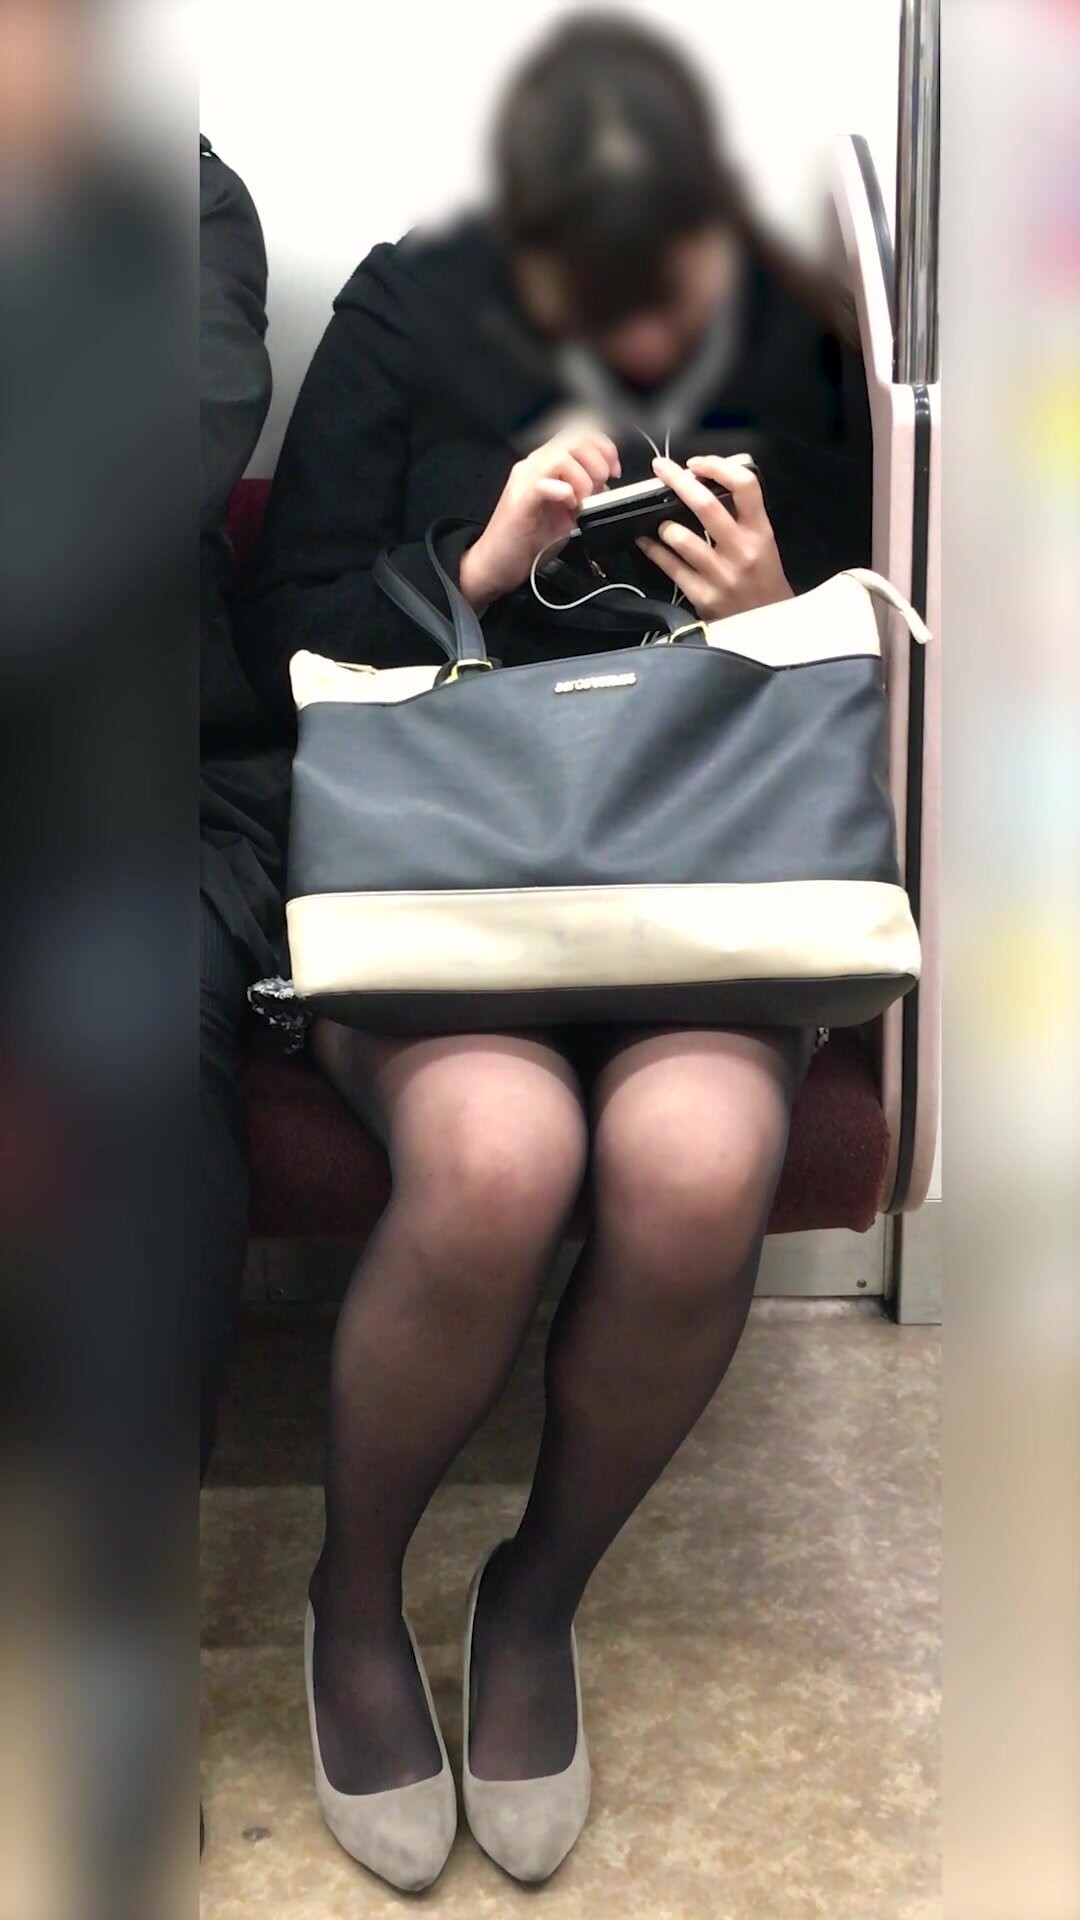 Japanese Lady Pantyhose Upskirt - video 76 - ThisVid.com